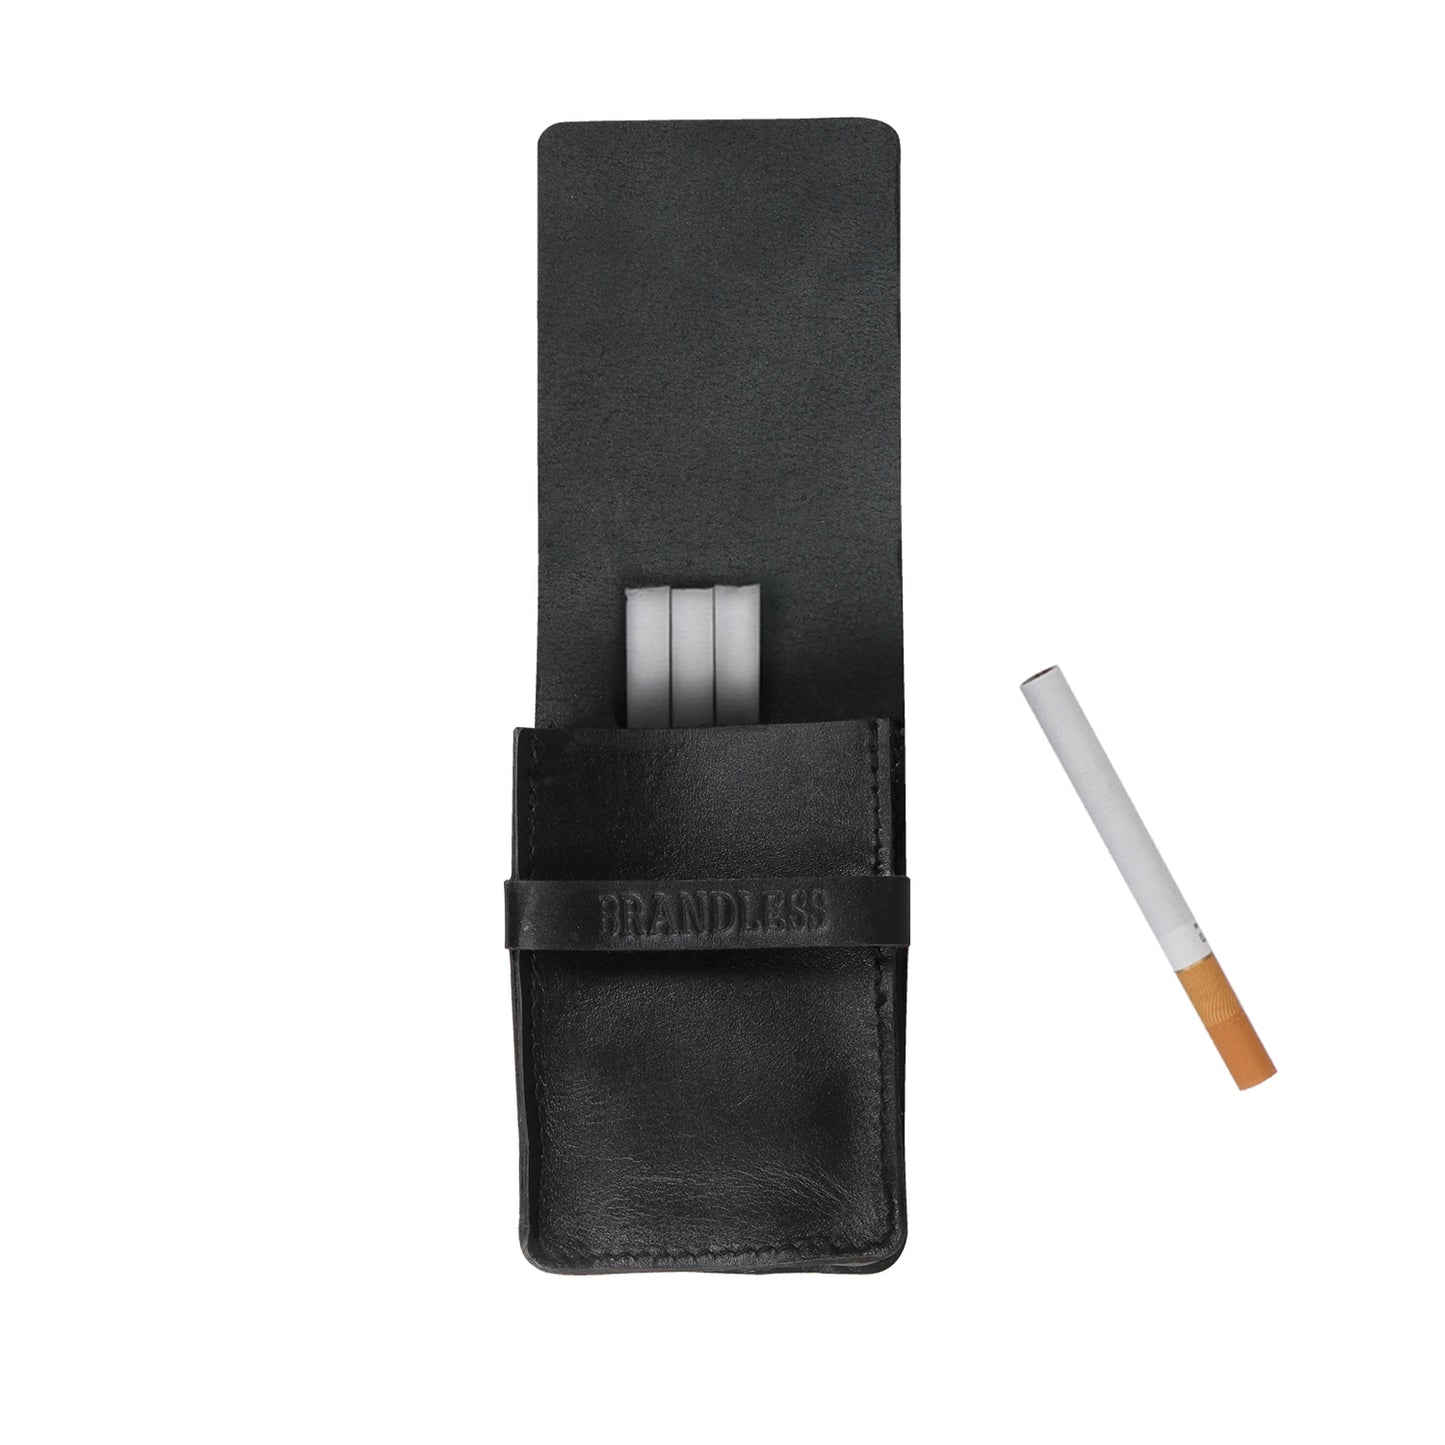 Leather Cigarette Case - Burgundy